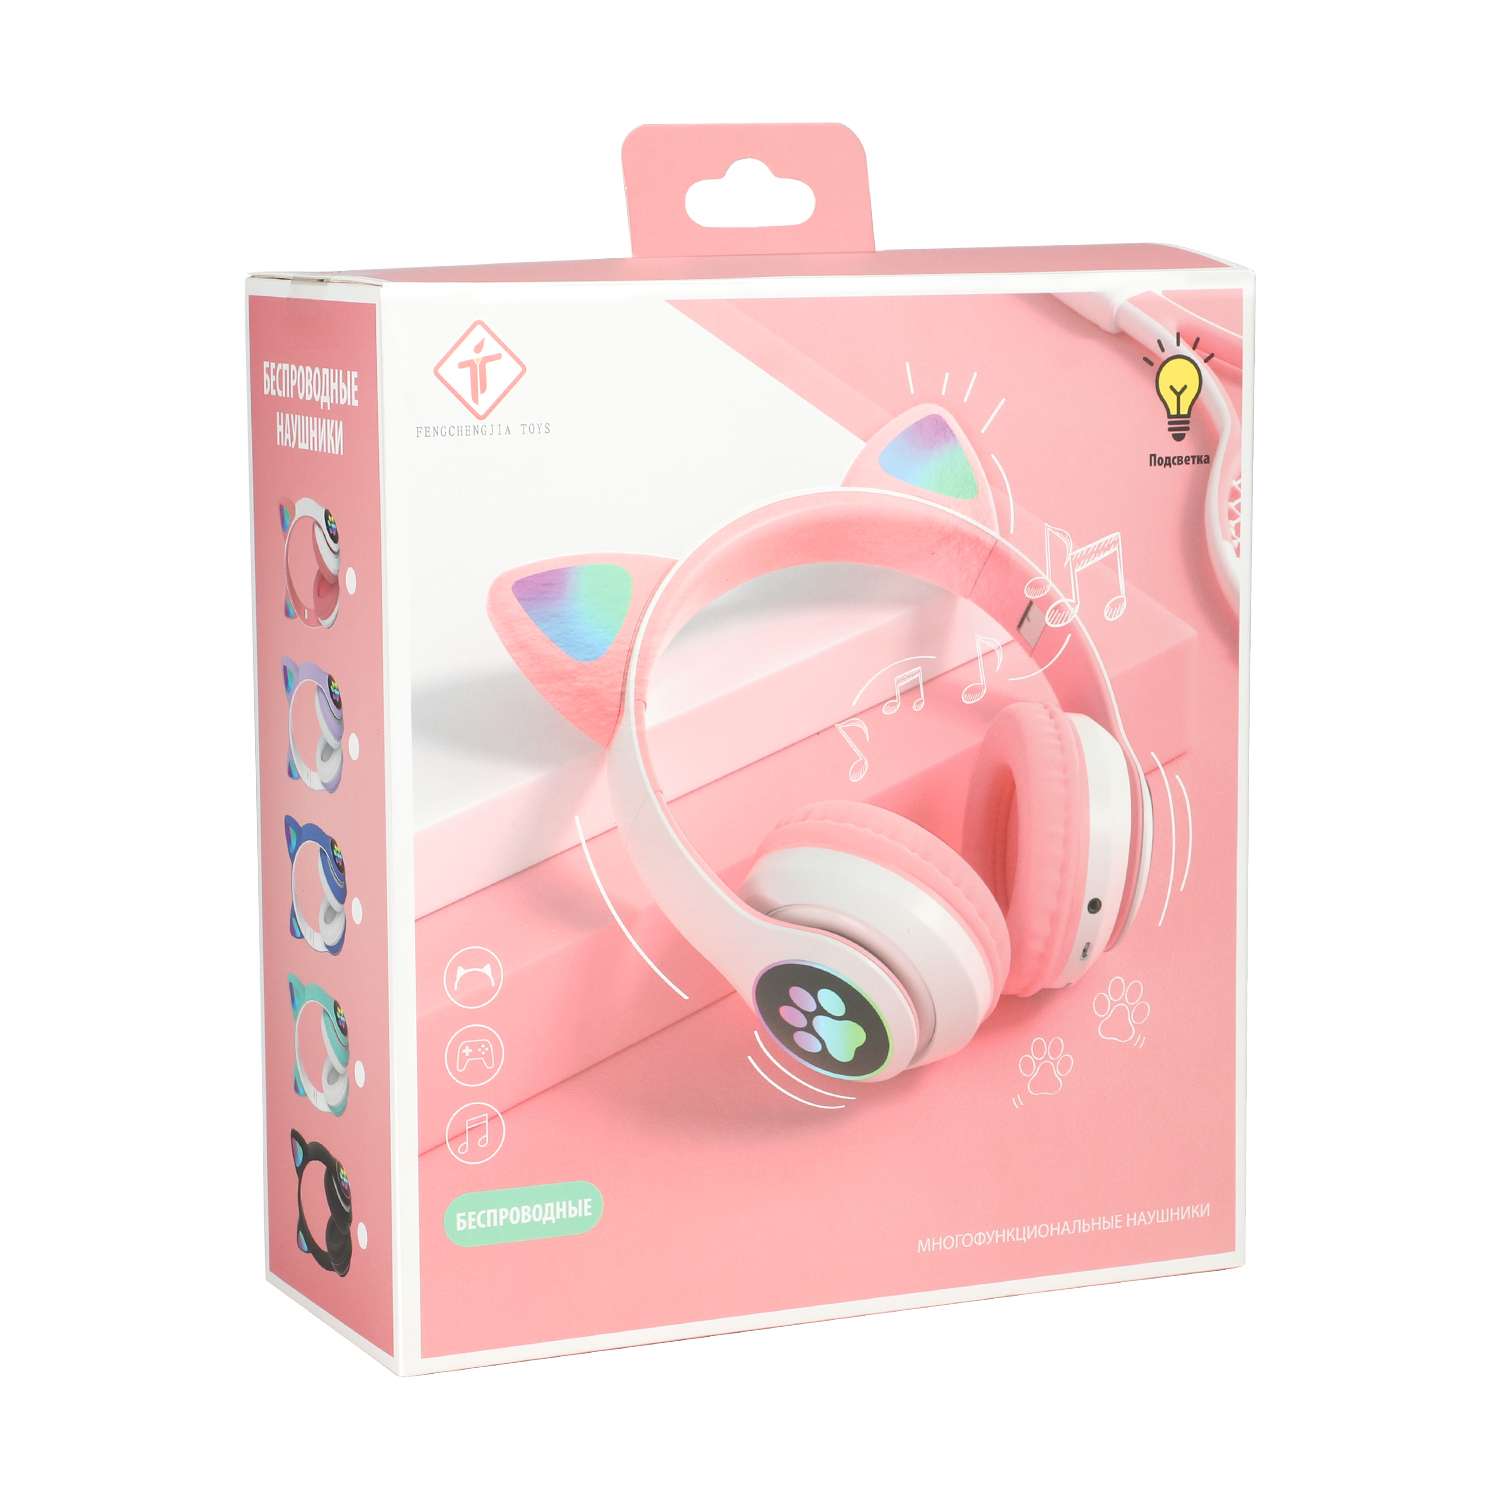 Наушники Fengchengjia toys Bluetooth Розовый YS0450971 - фото 3